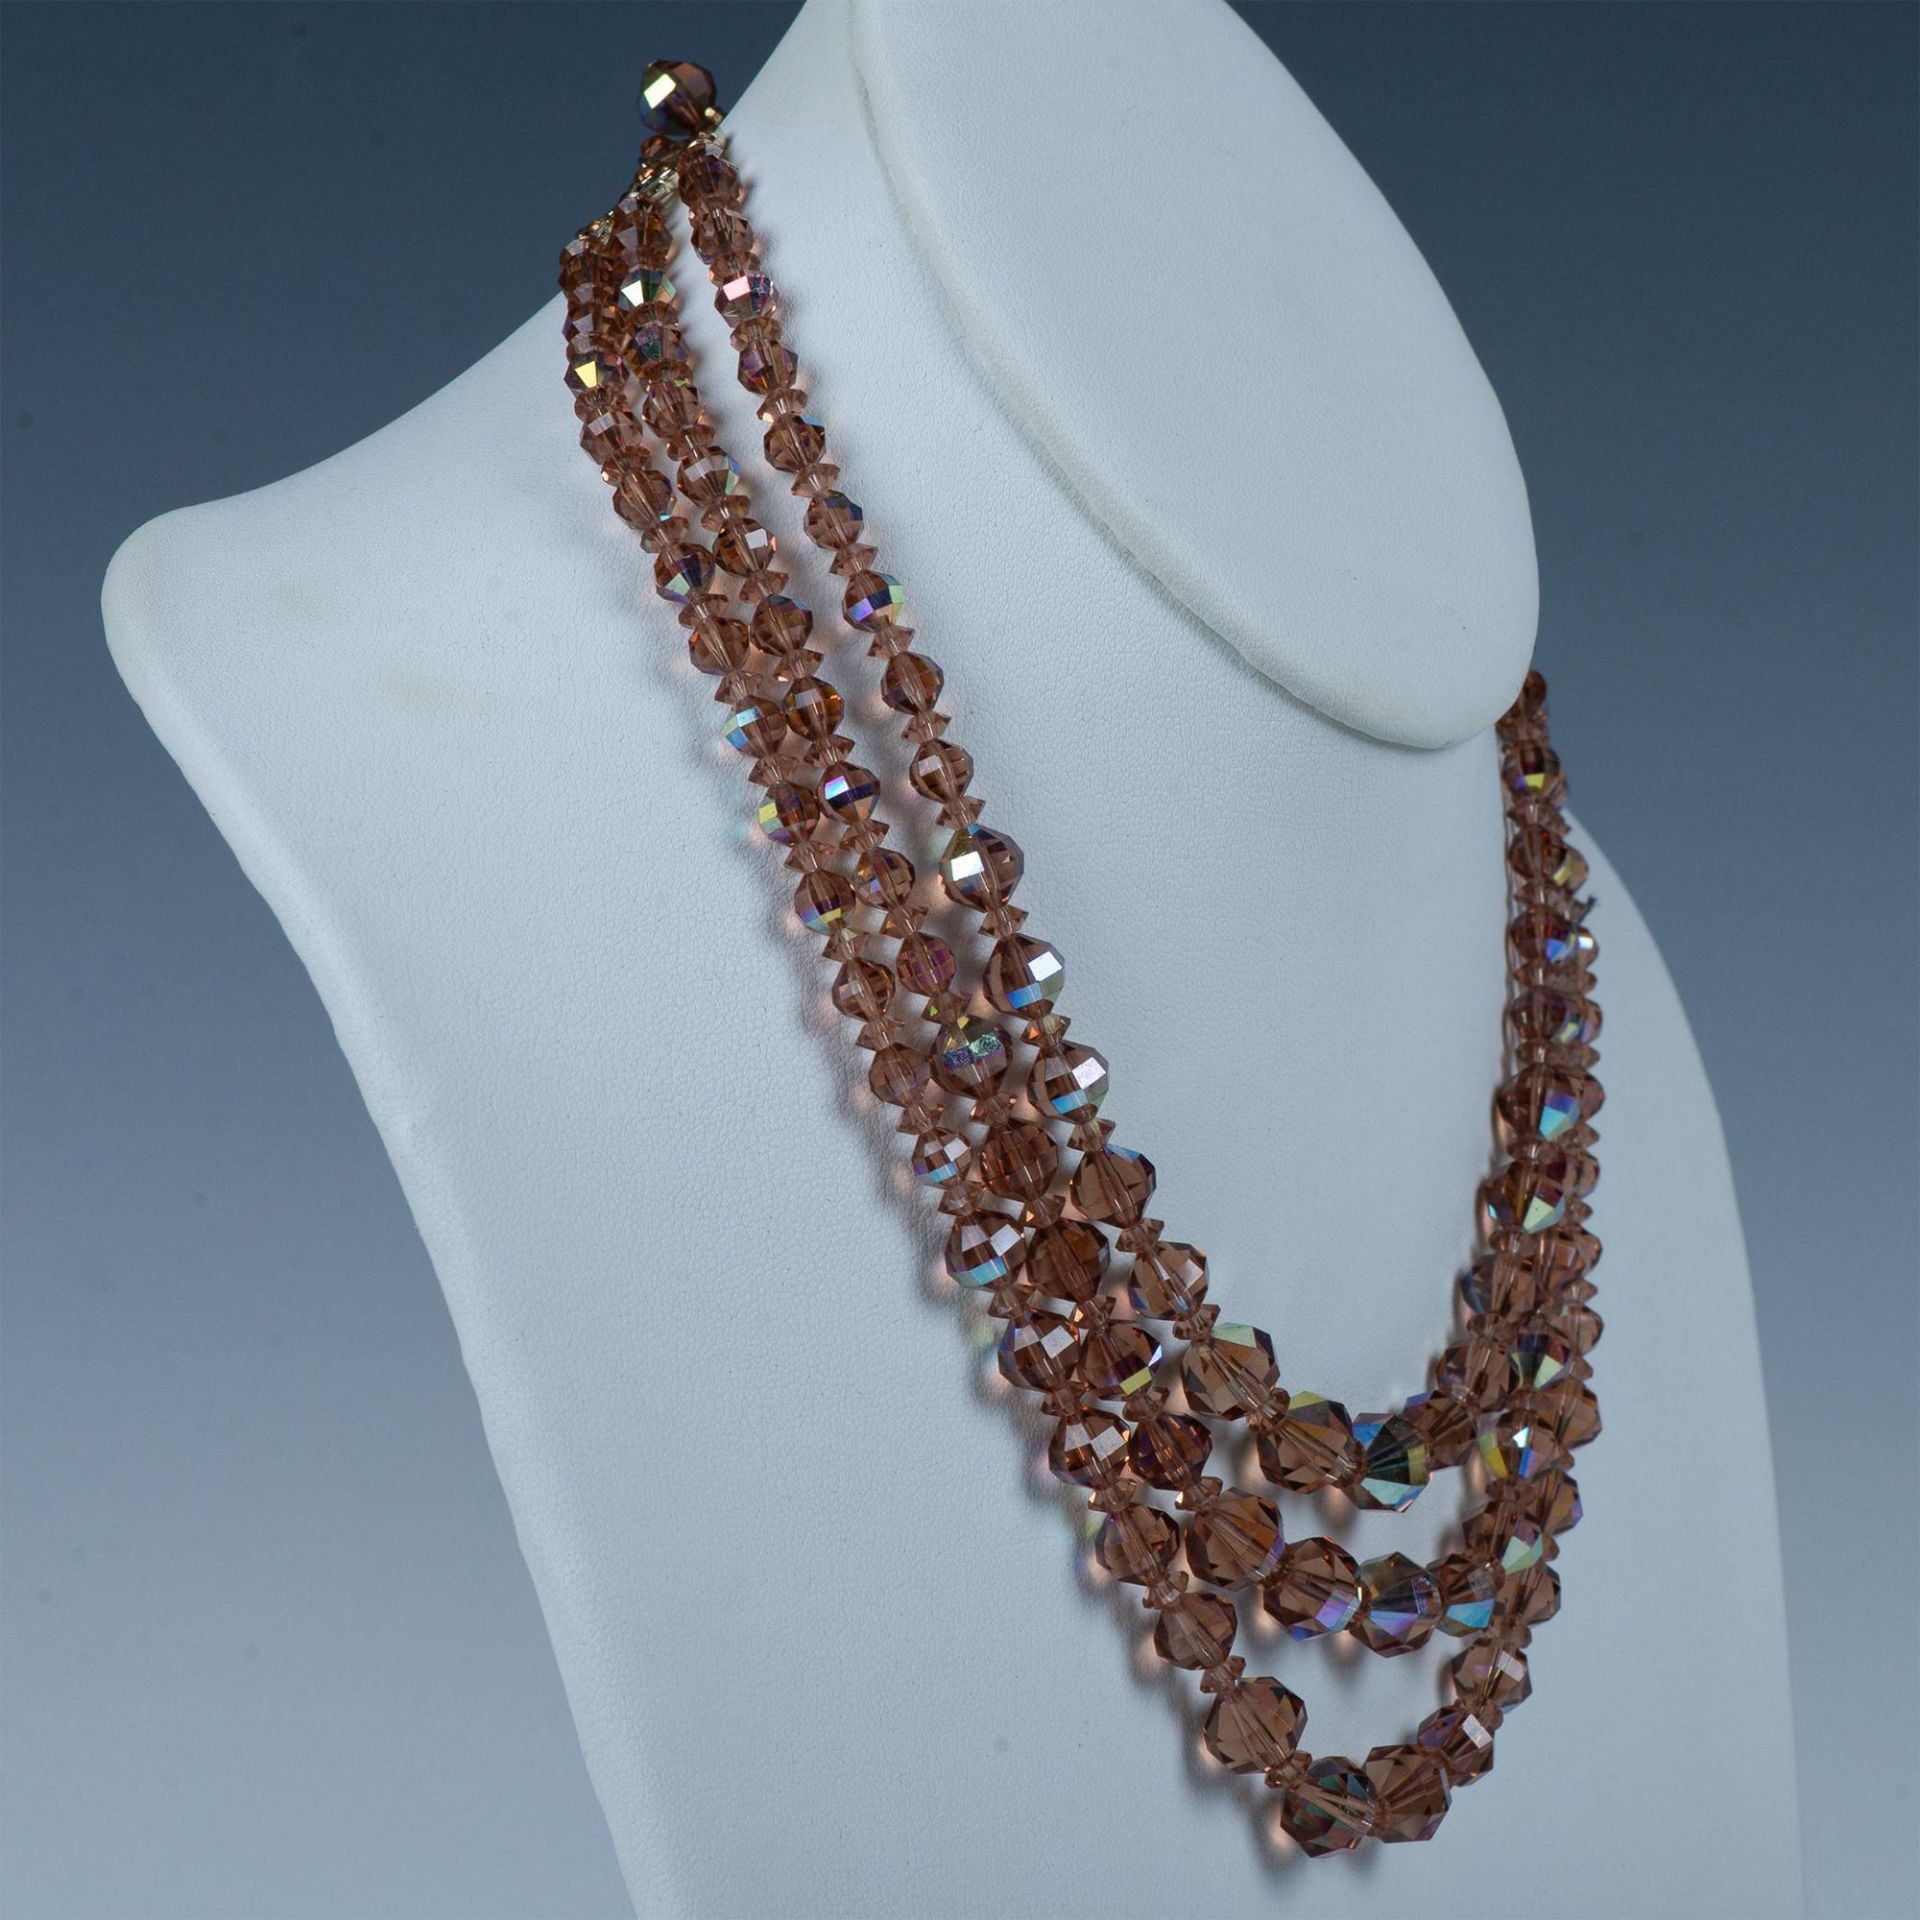 Stunning 3-Strand Iridescent Bead Necklace - Image 2 of 5